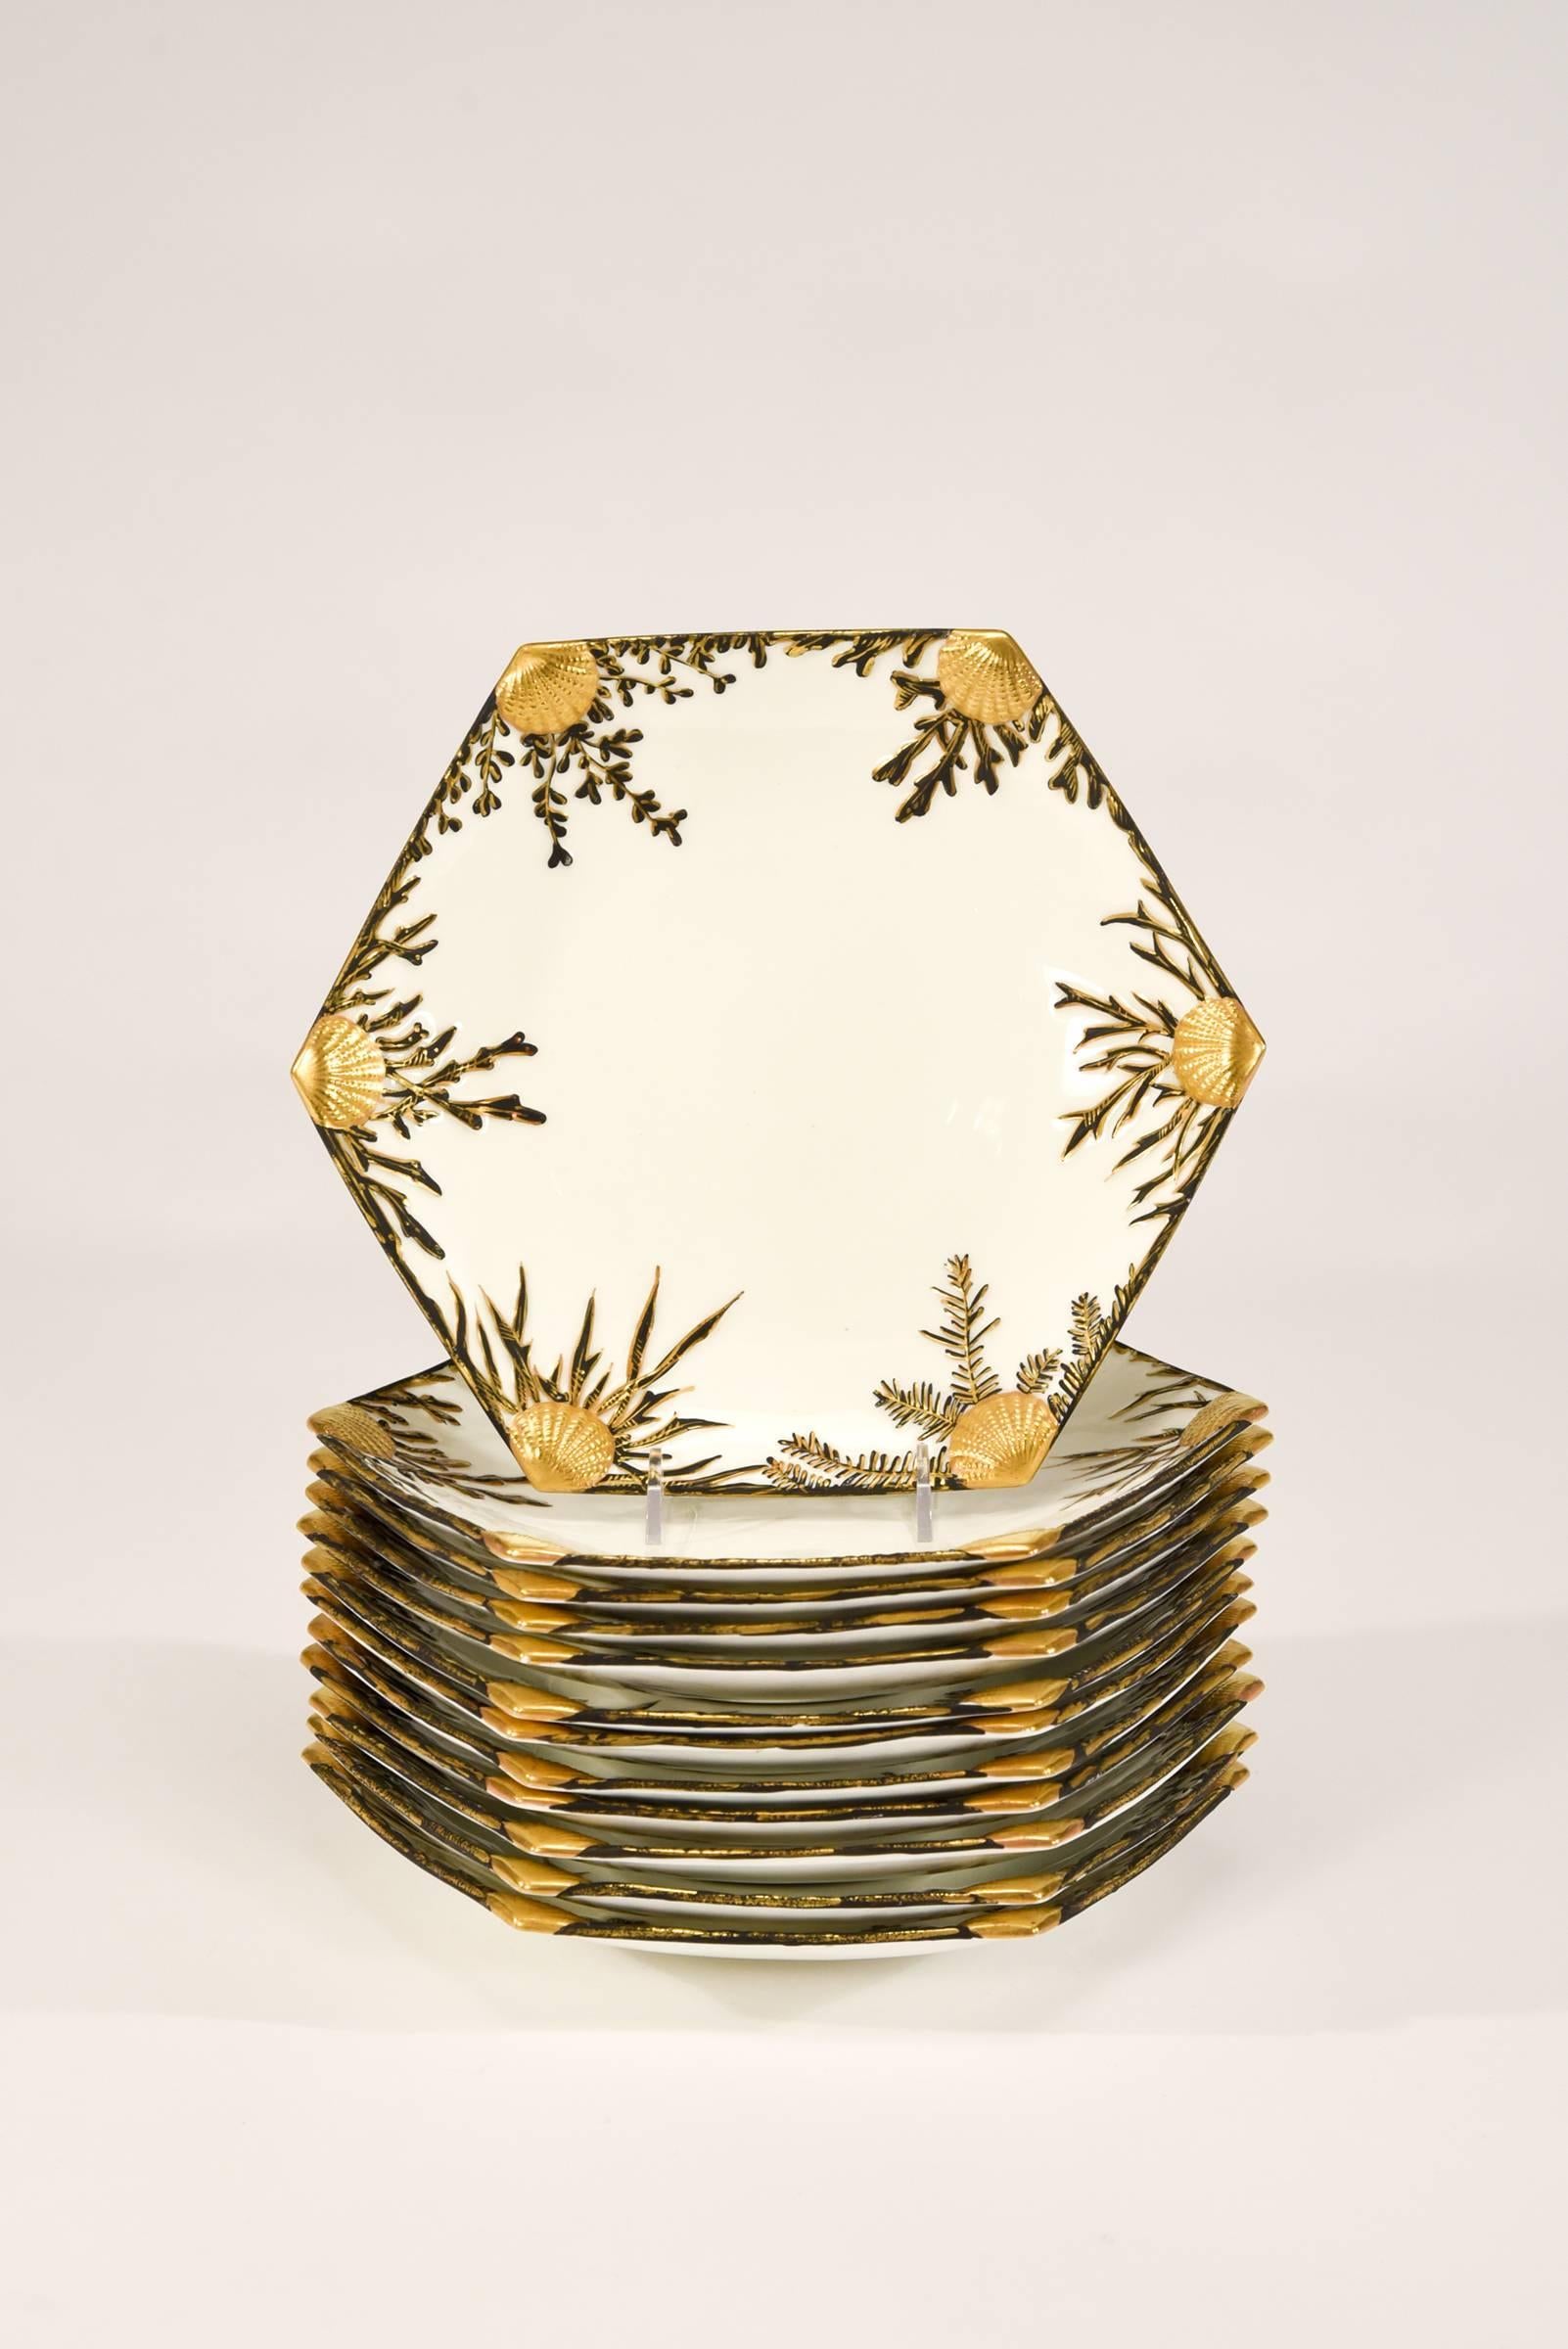 English Set of 12 Aesthetic Movement 19th Century Bodley Hexagonal Shell/Seafood Plates